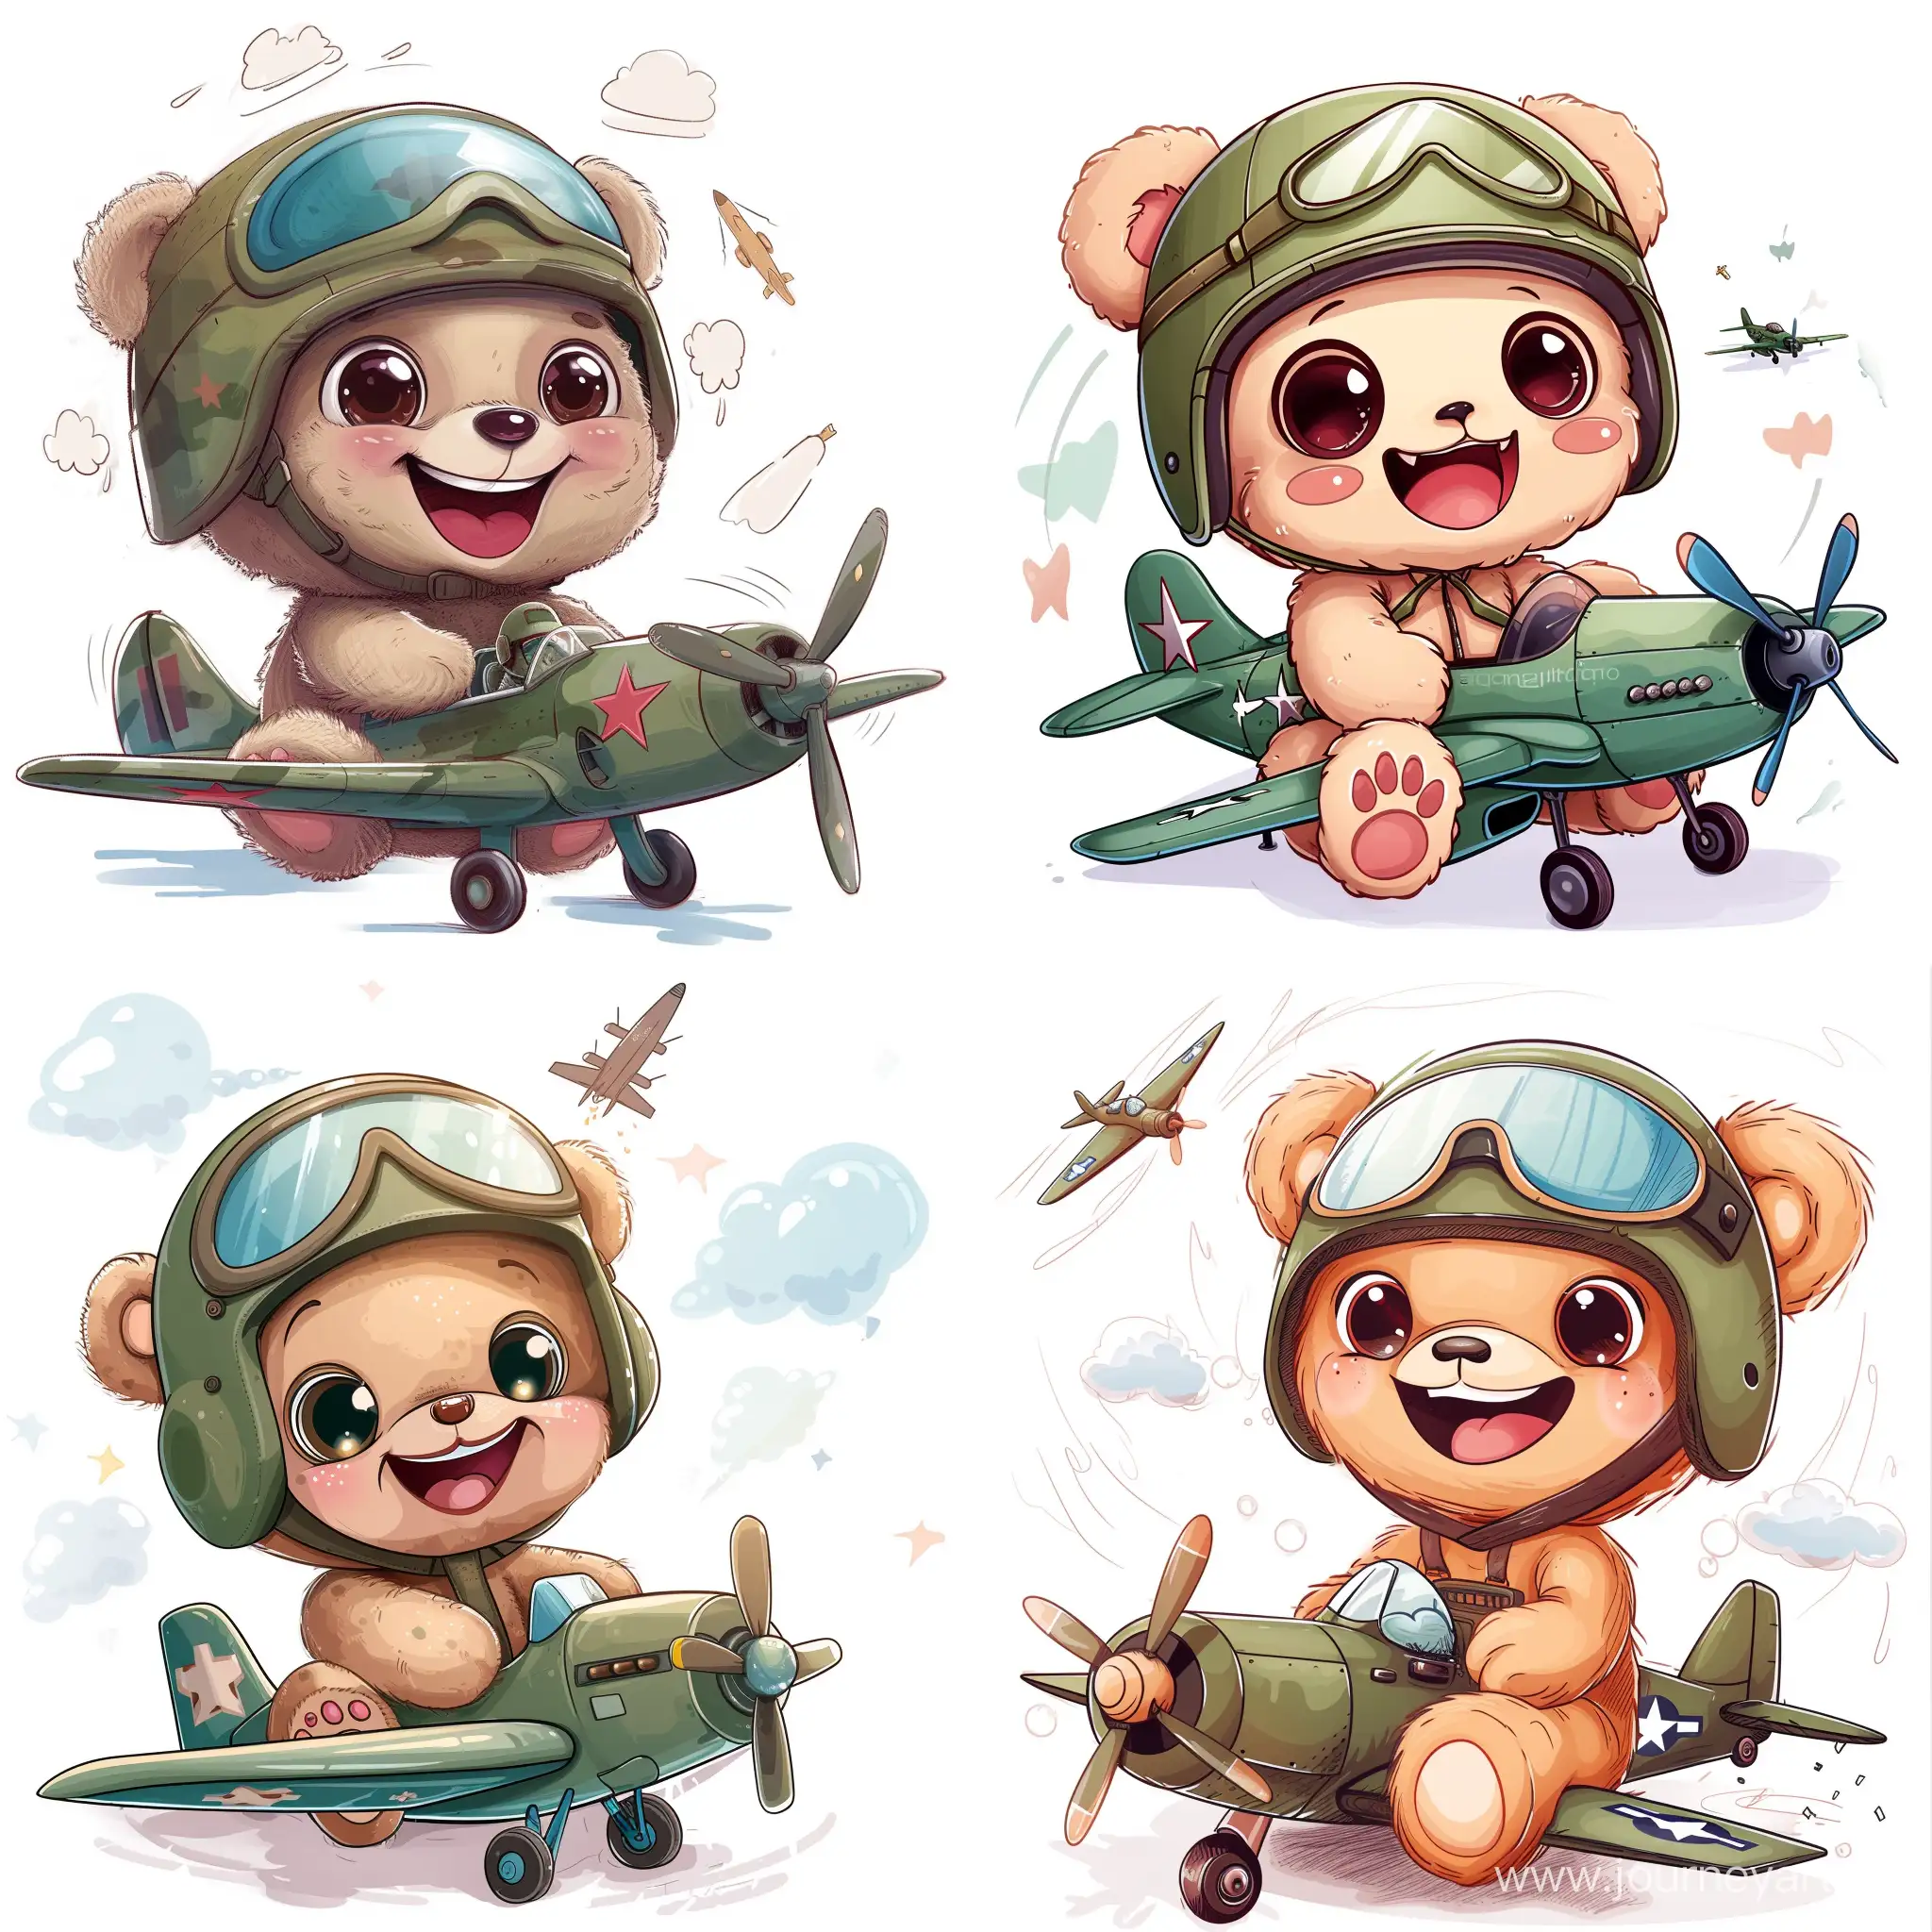 Adorable-Teddy-Bear-Pilot-in-Military-Toy-Plane-Pixart-Vector-Illustration